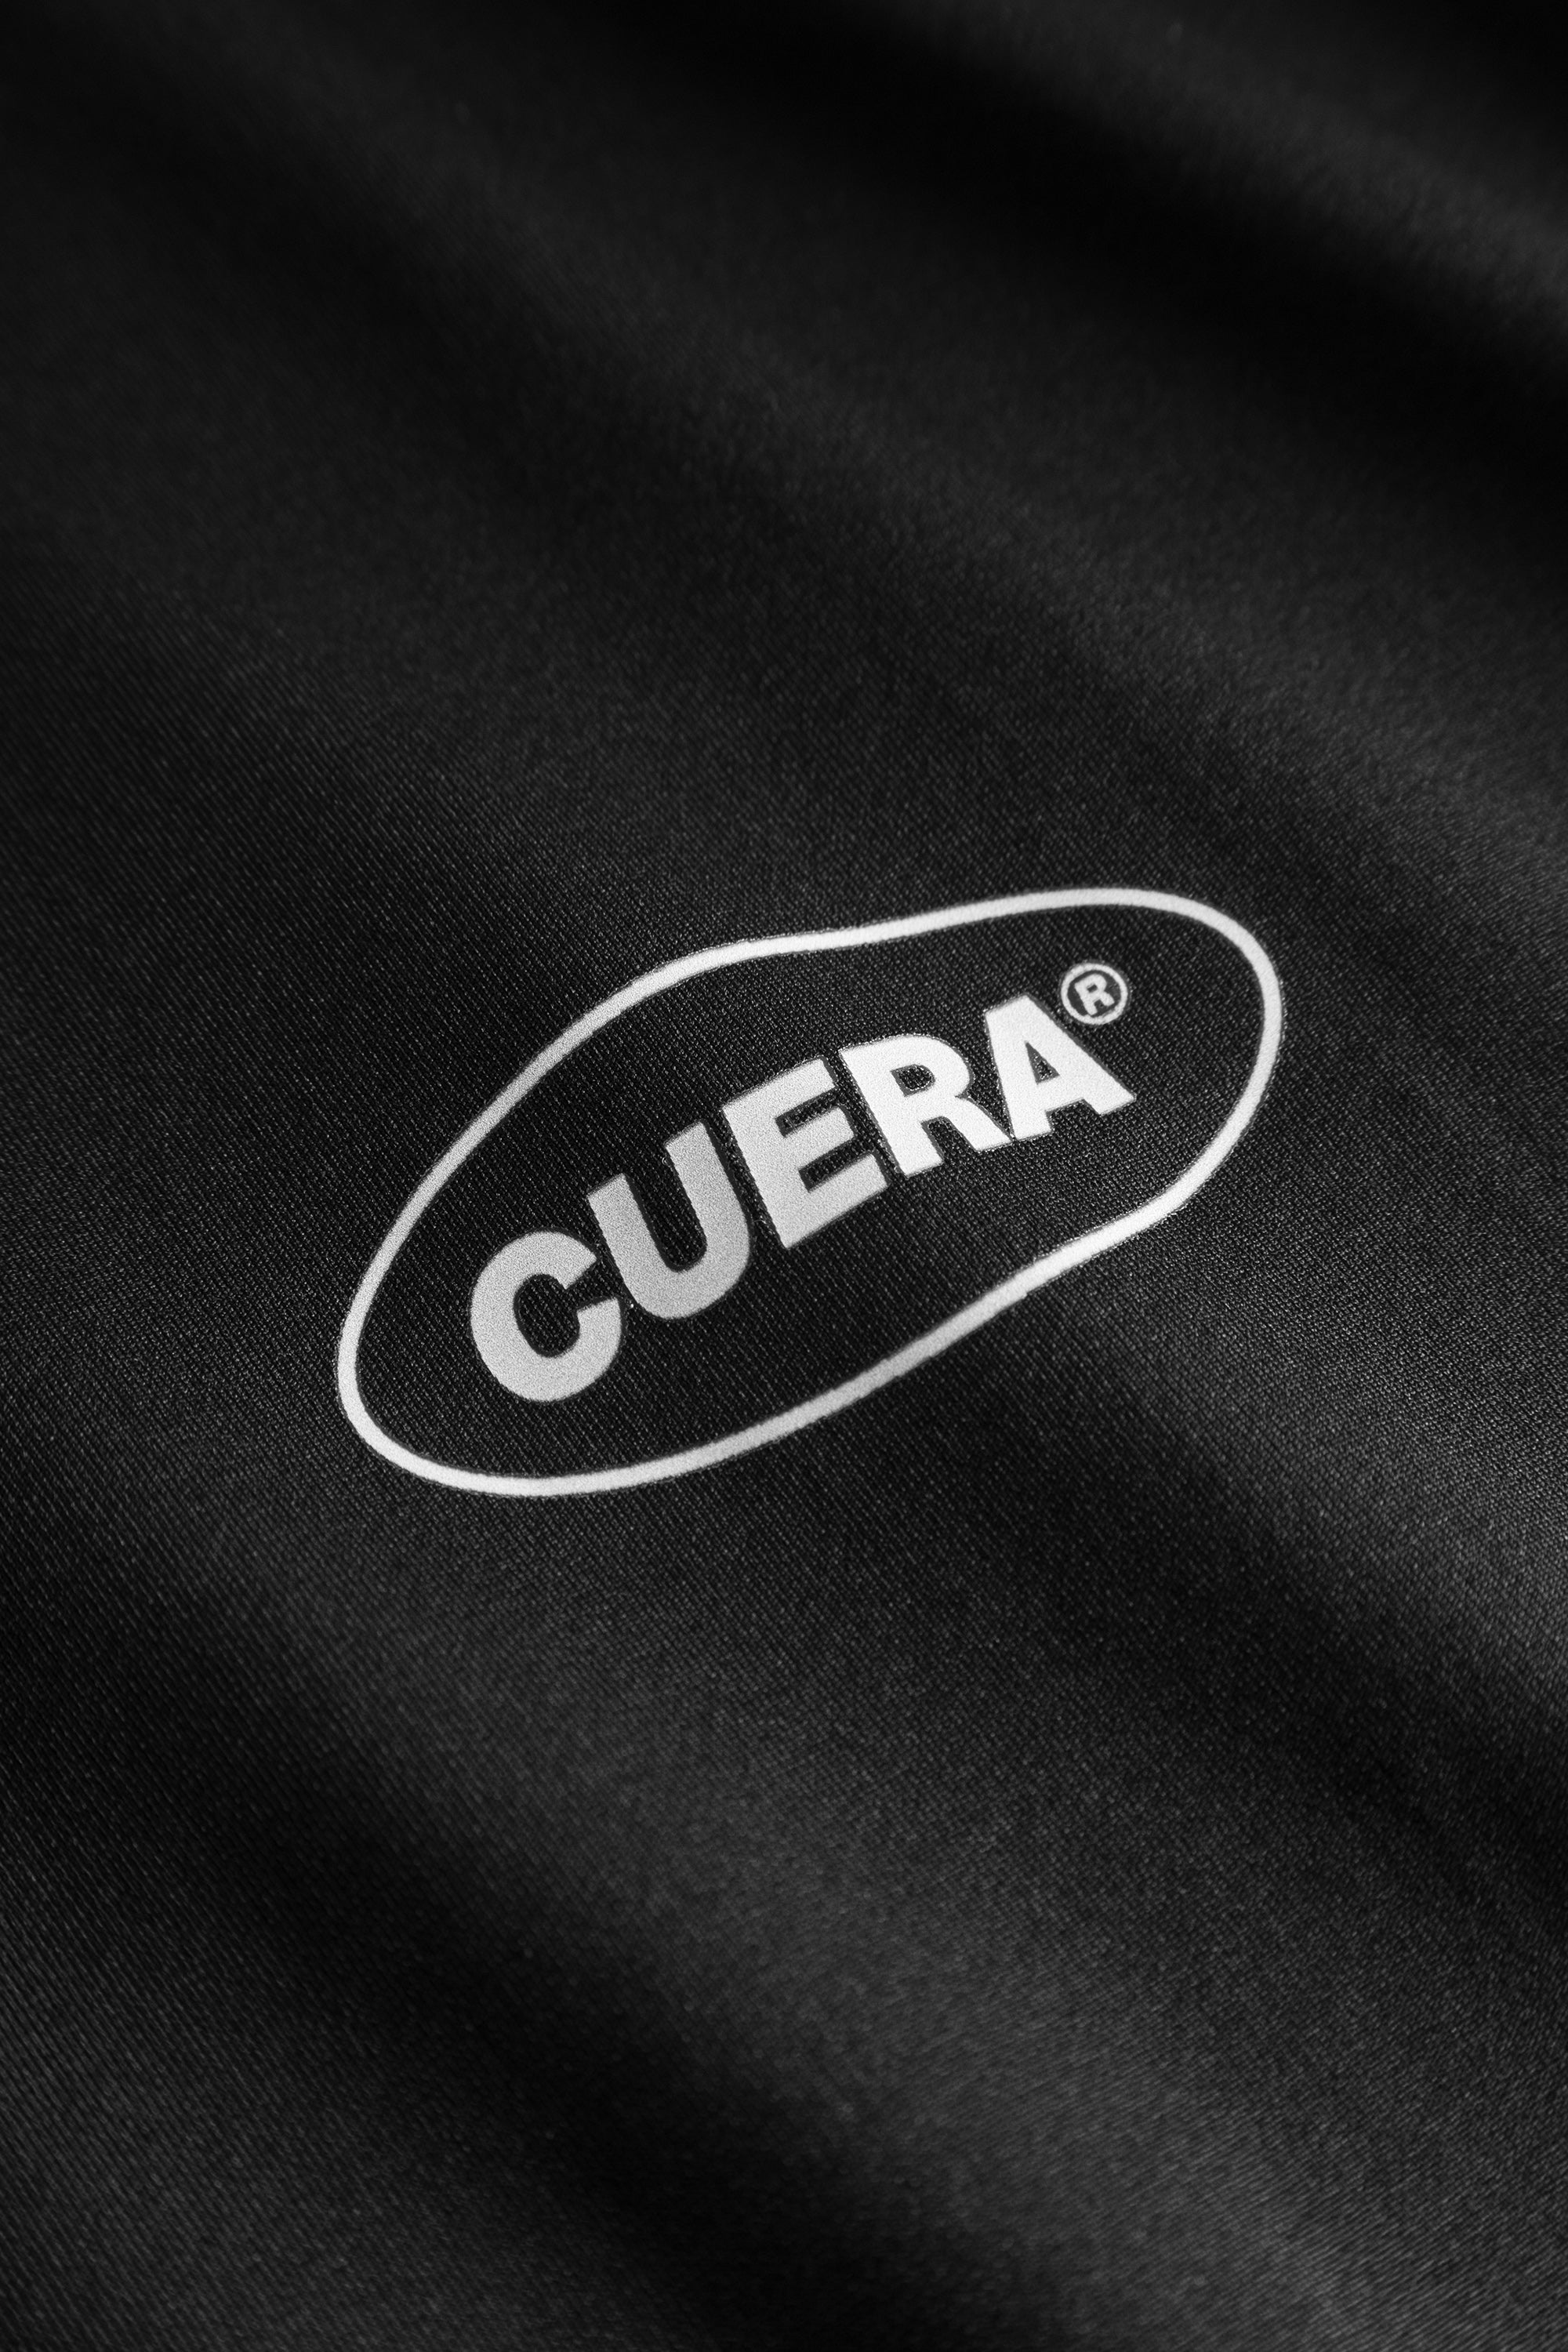 Cuera Oncourt Made T-shirt (Black)